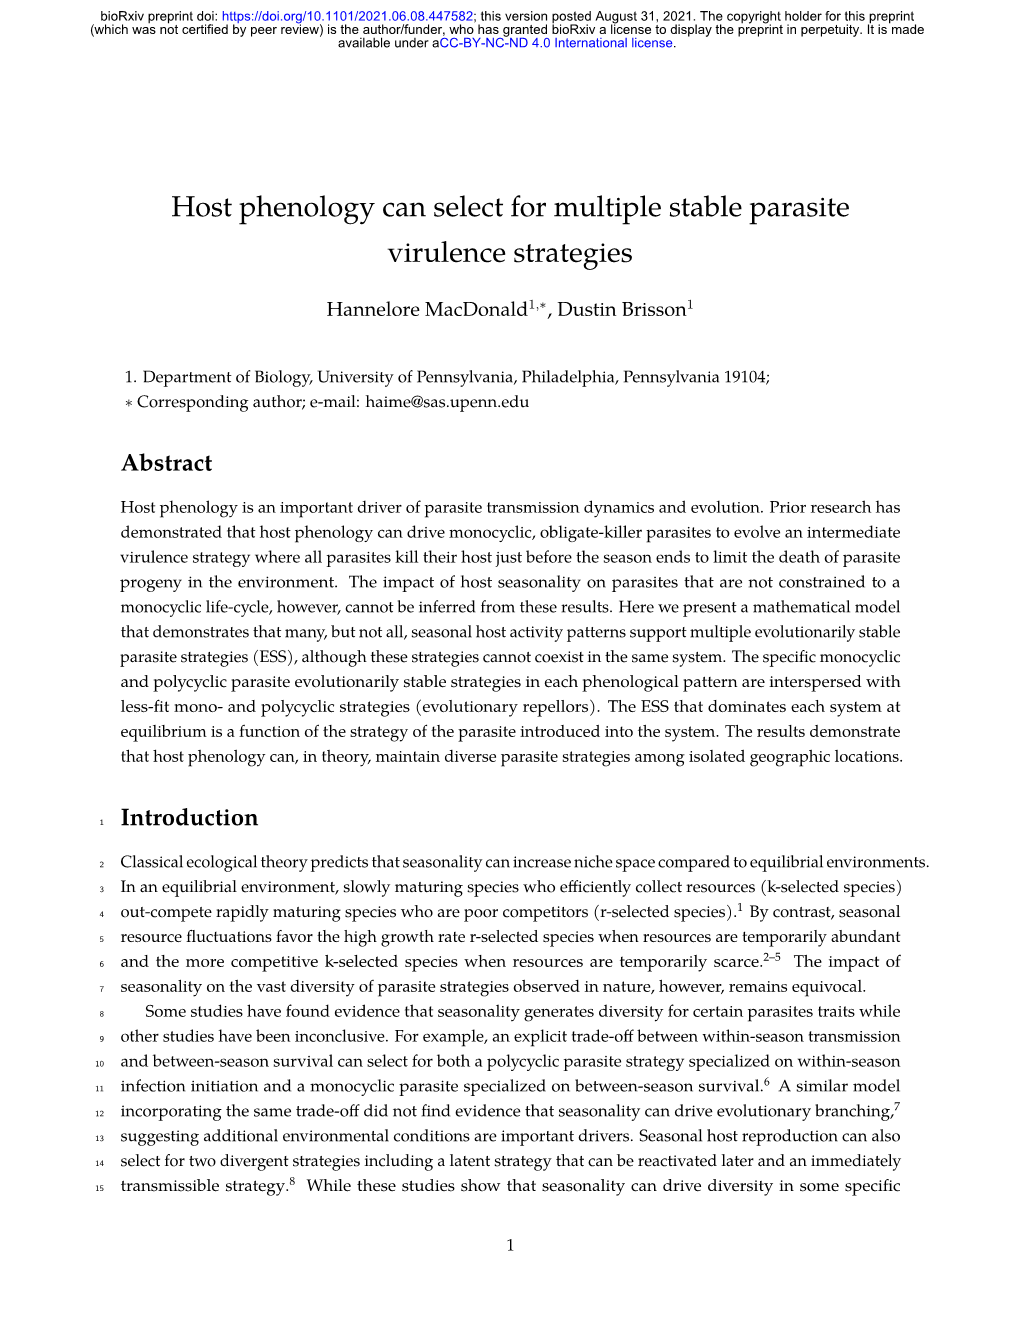 Host Phenology Can Select for Multiple Stable Parasite Virulence Strategies